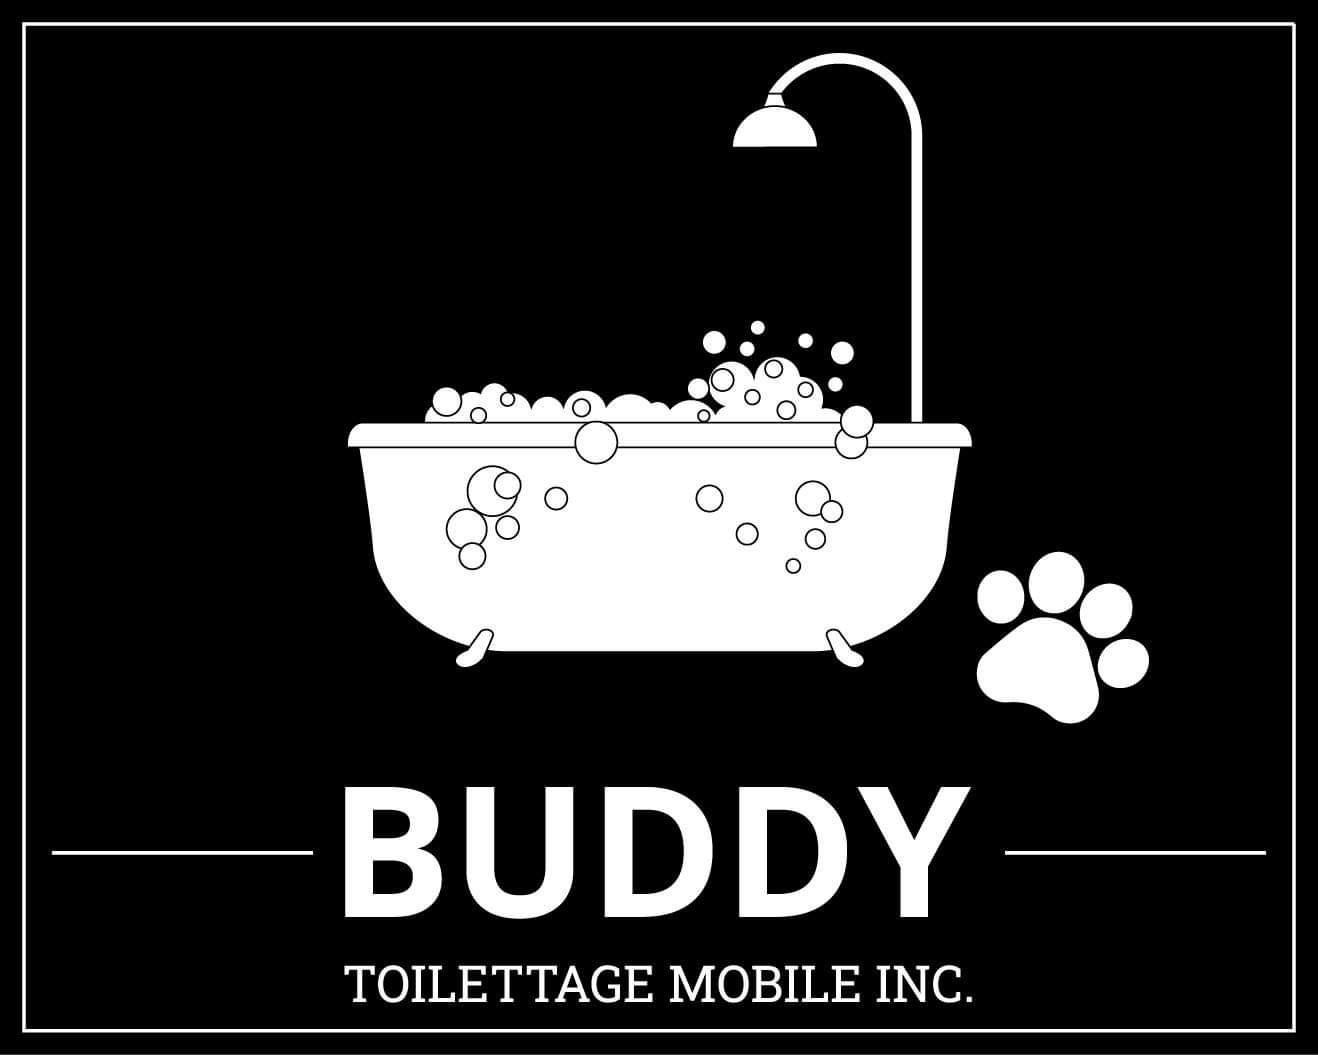 Toilettage mobile Buddy